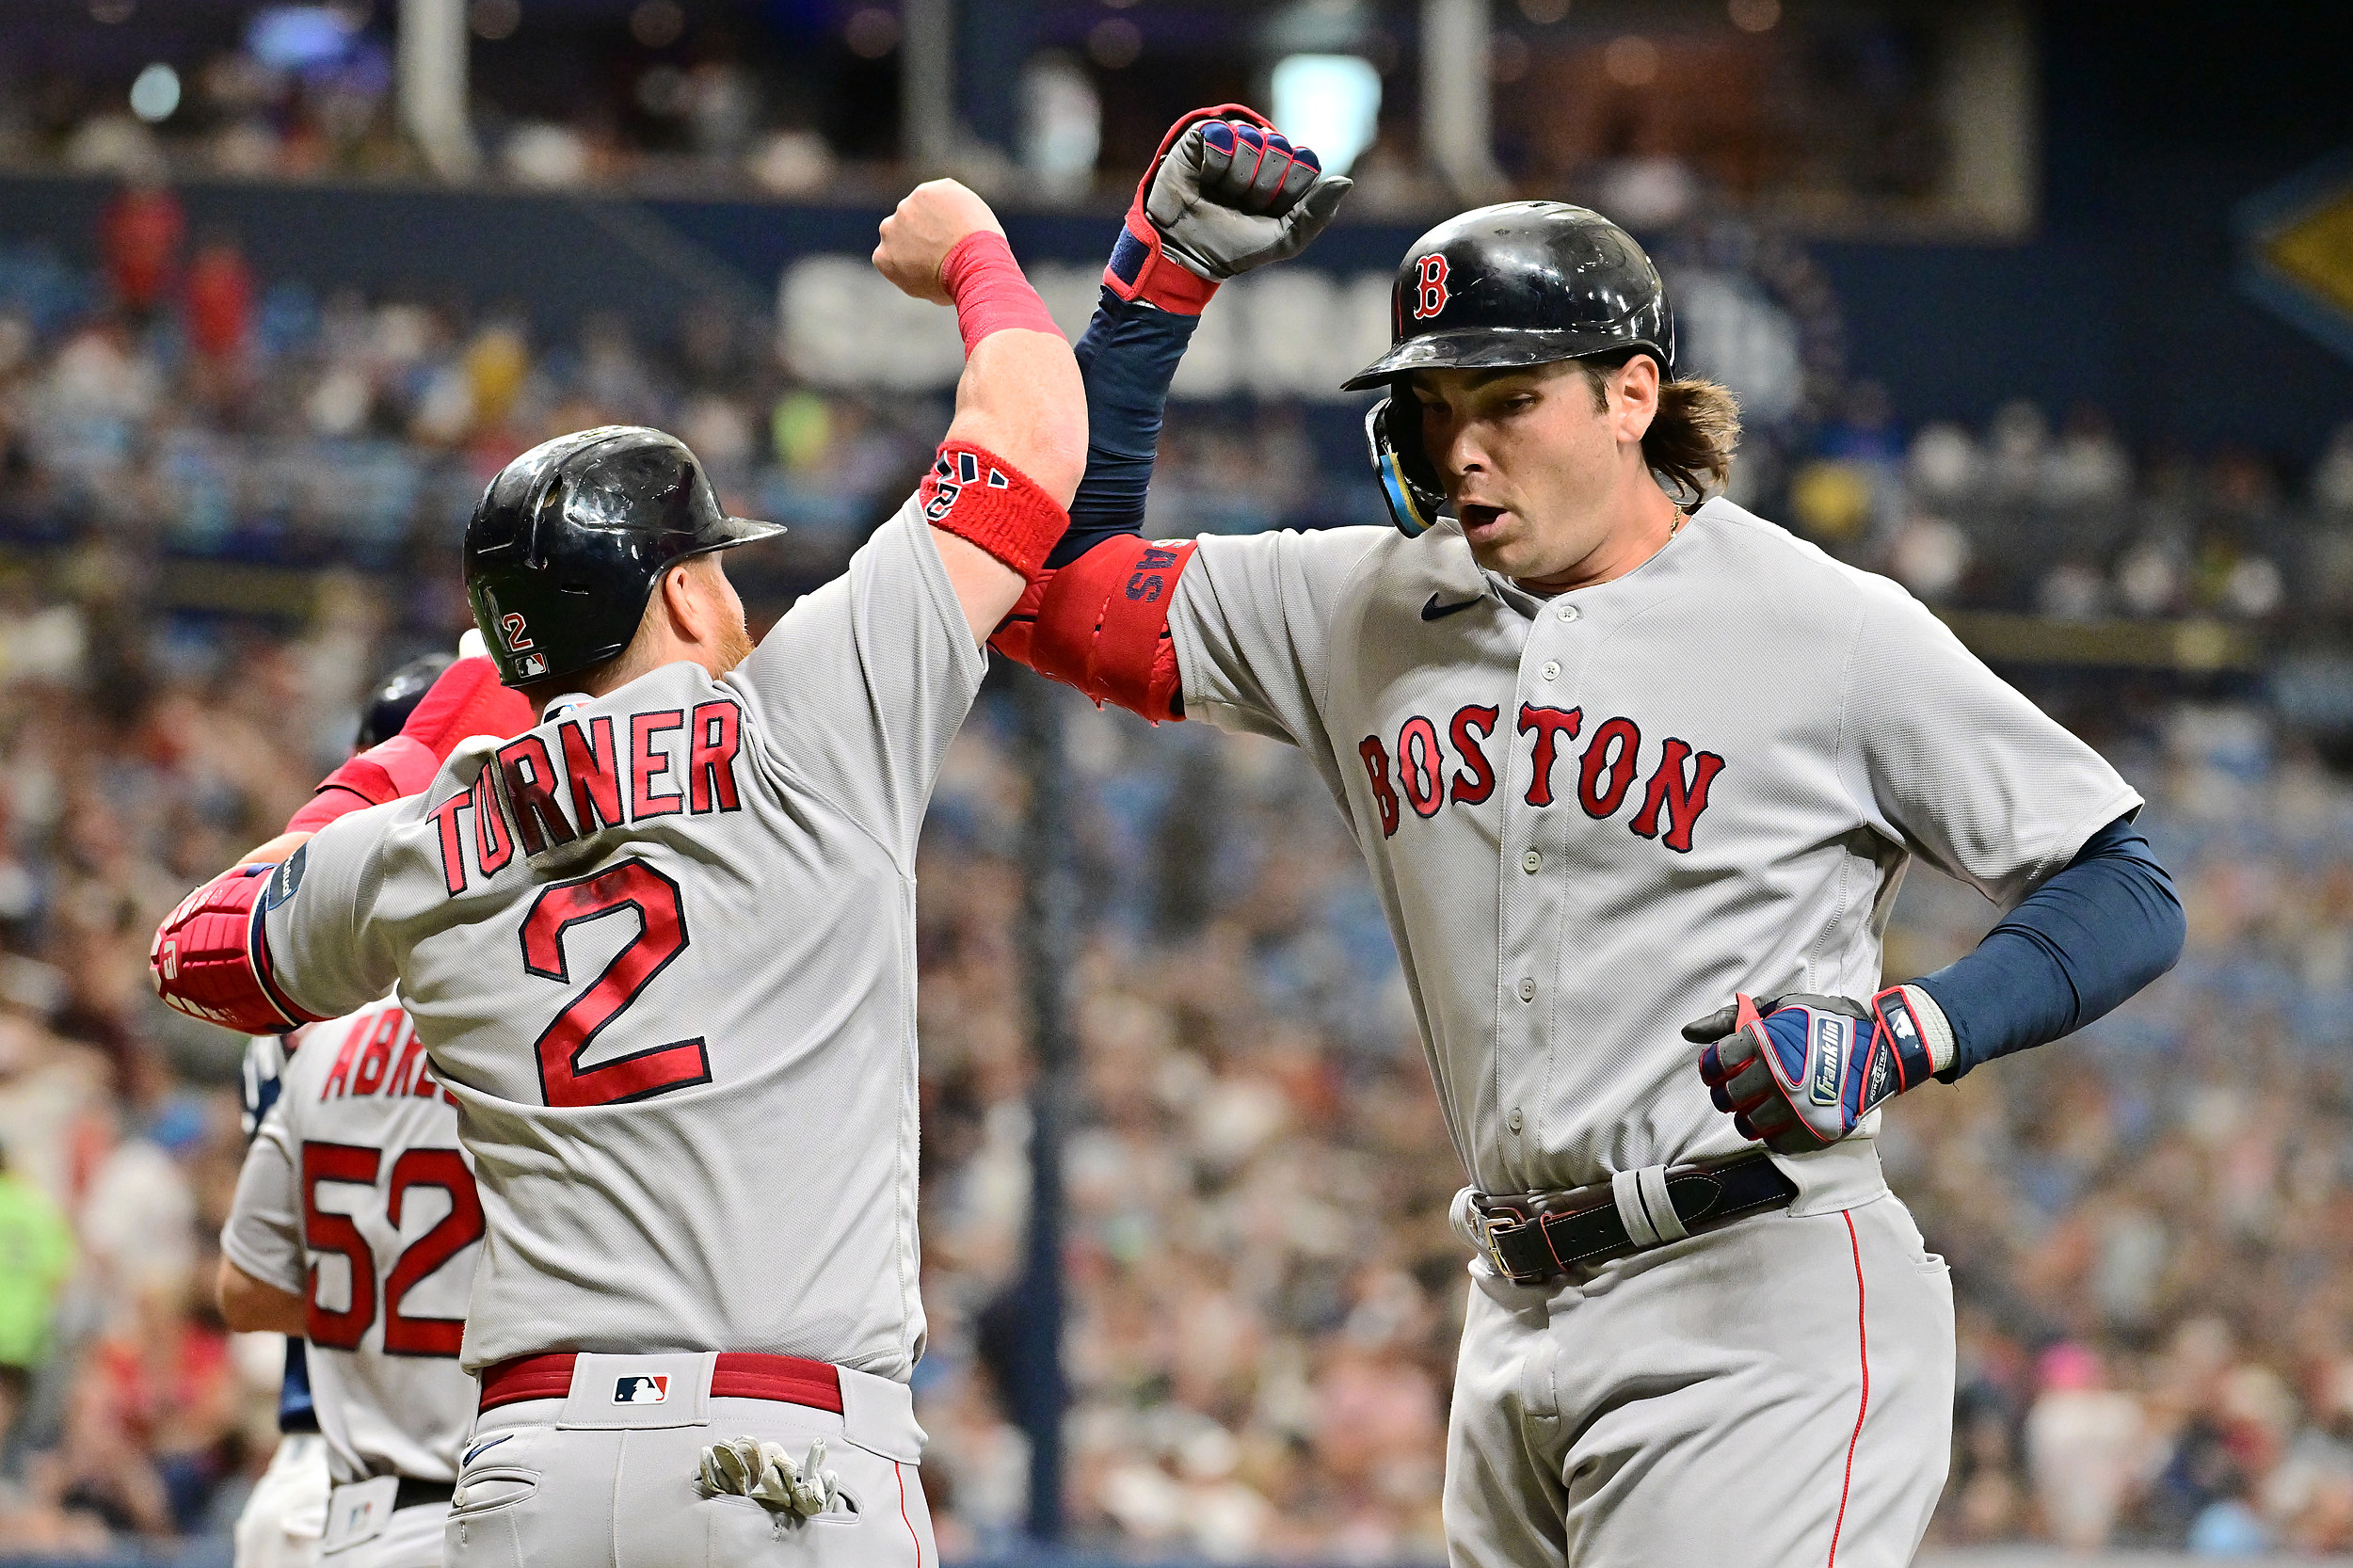 Sale dominates, Yoshida's three run homer lifts Red Sox over